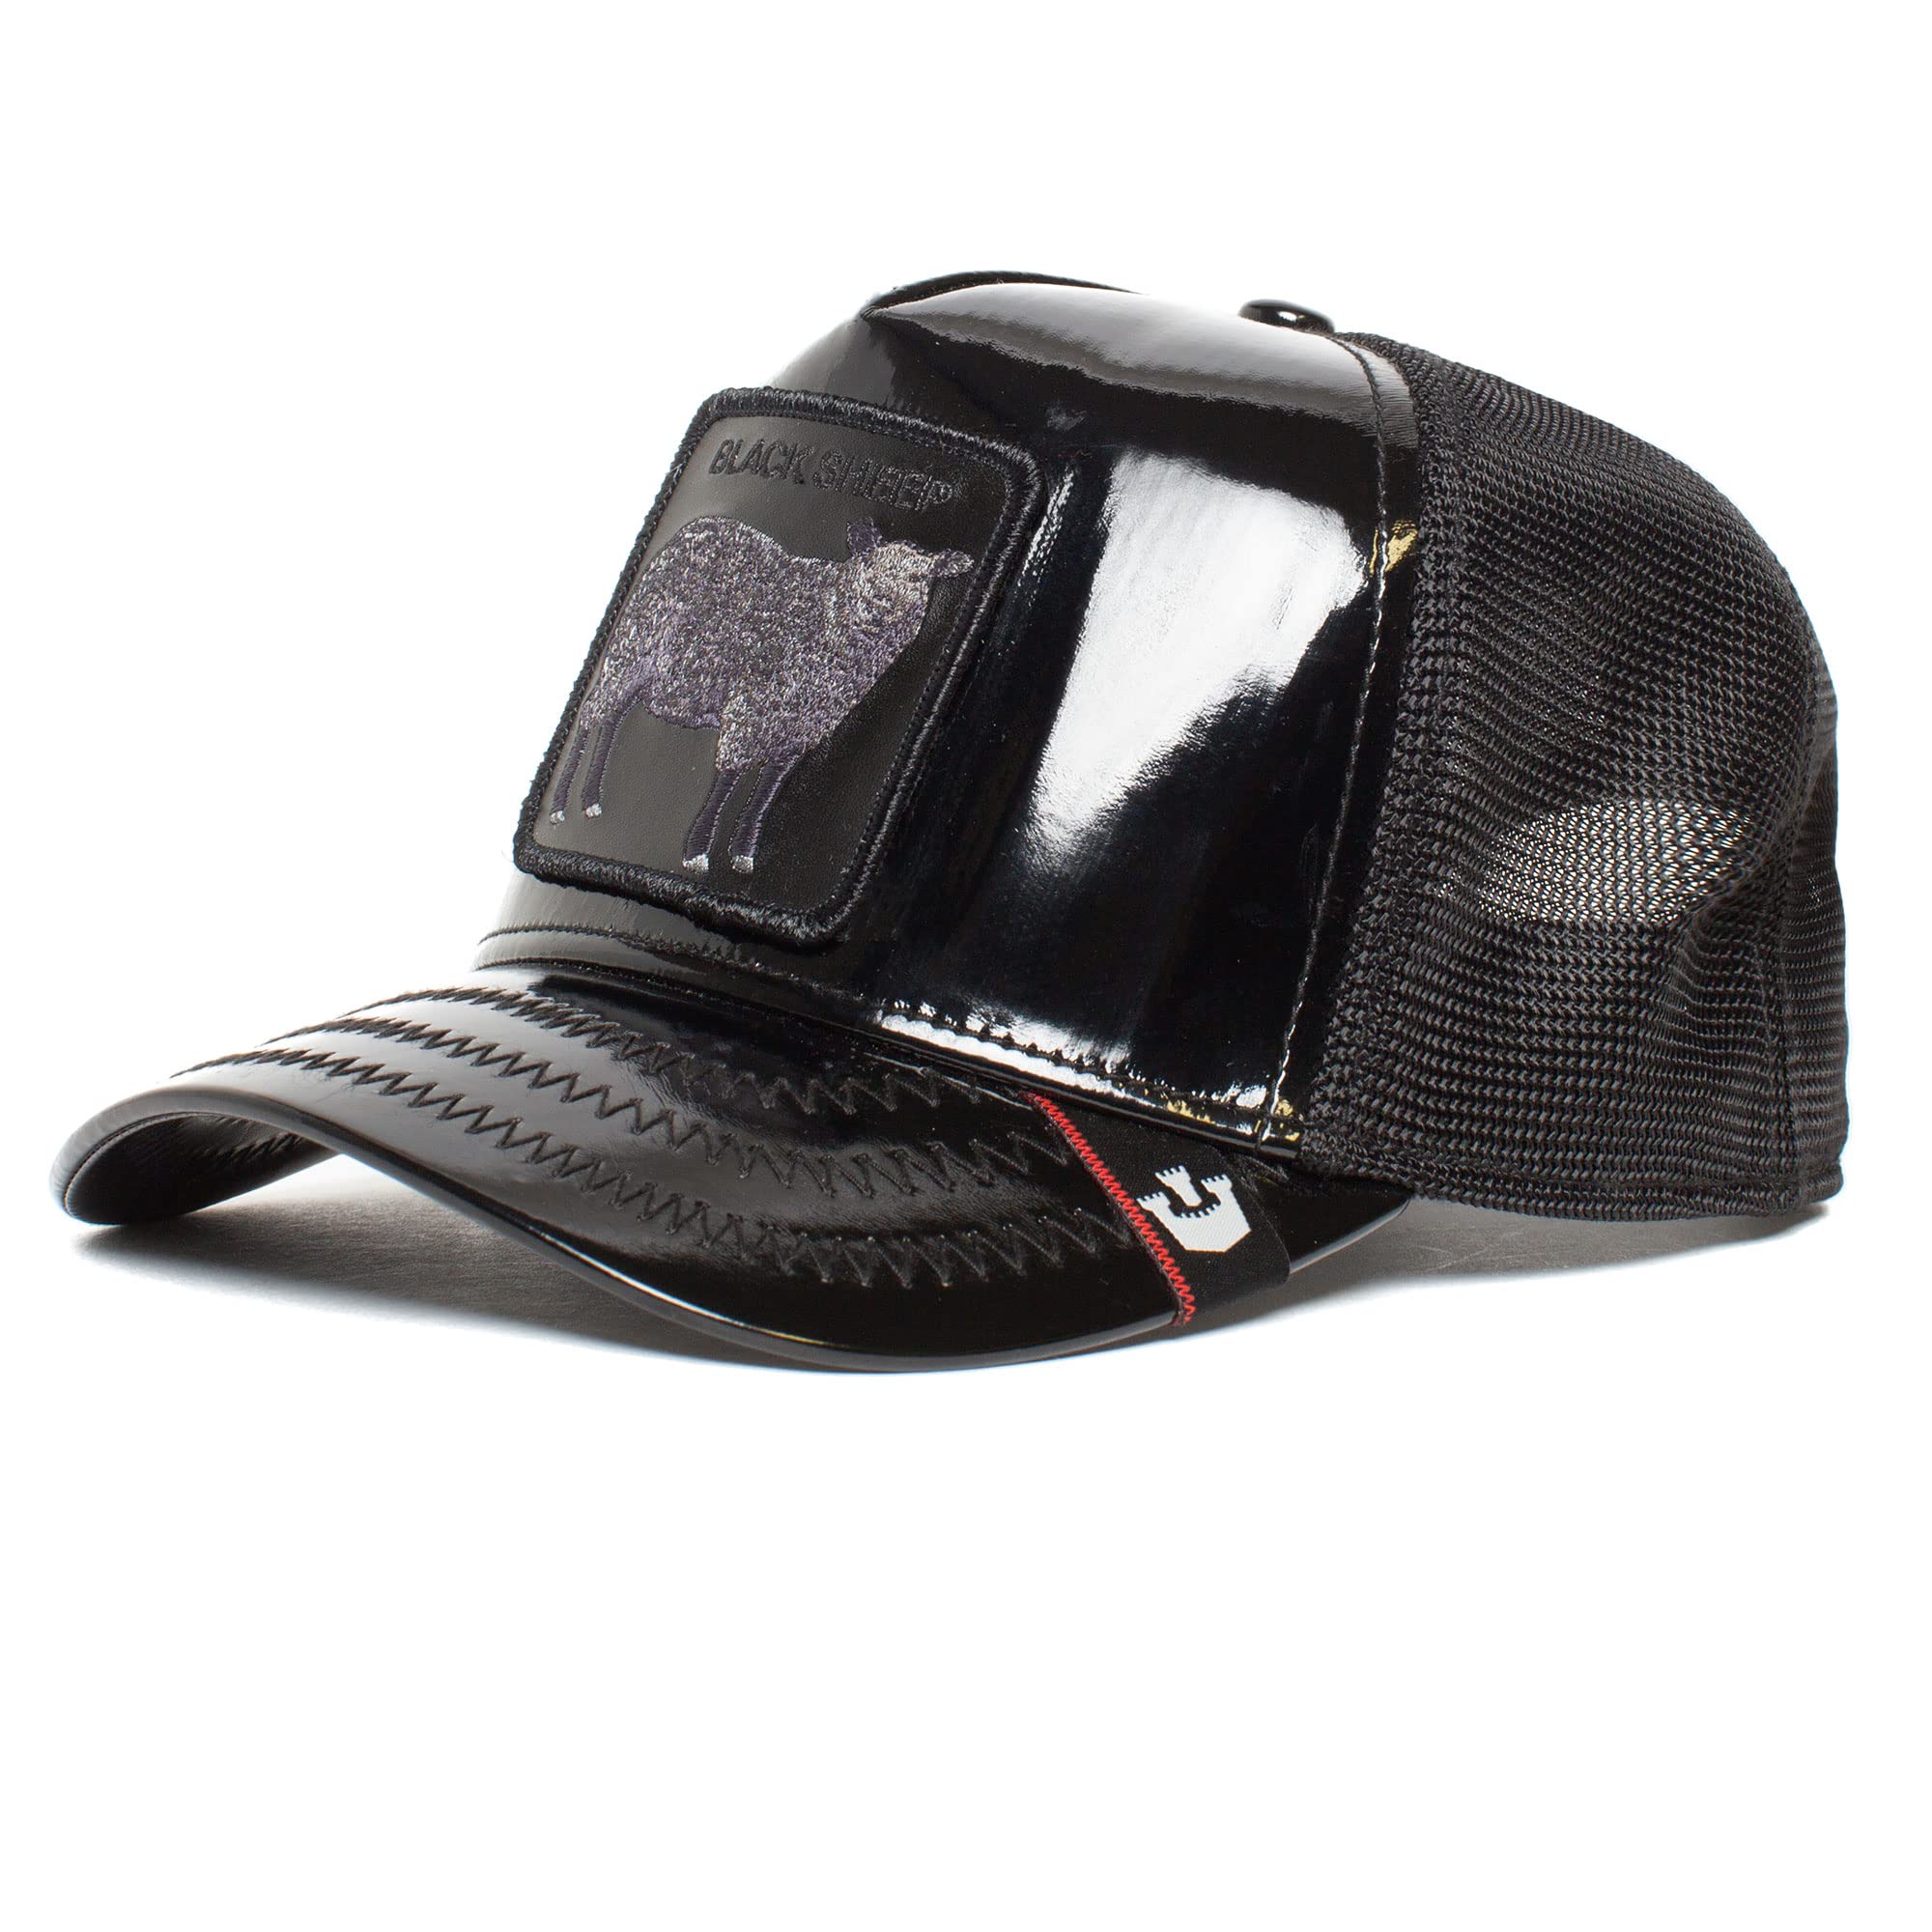 Goorin Bros. The Farm Unisex High Shine Faux Leather Adjustable Snapback Trucker Hat, Big Black, One Size - Caps Fitted Caps Fitted Goorin Bros.